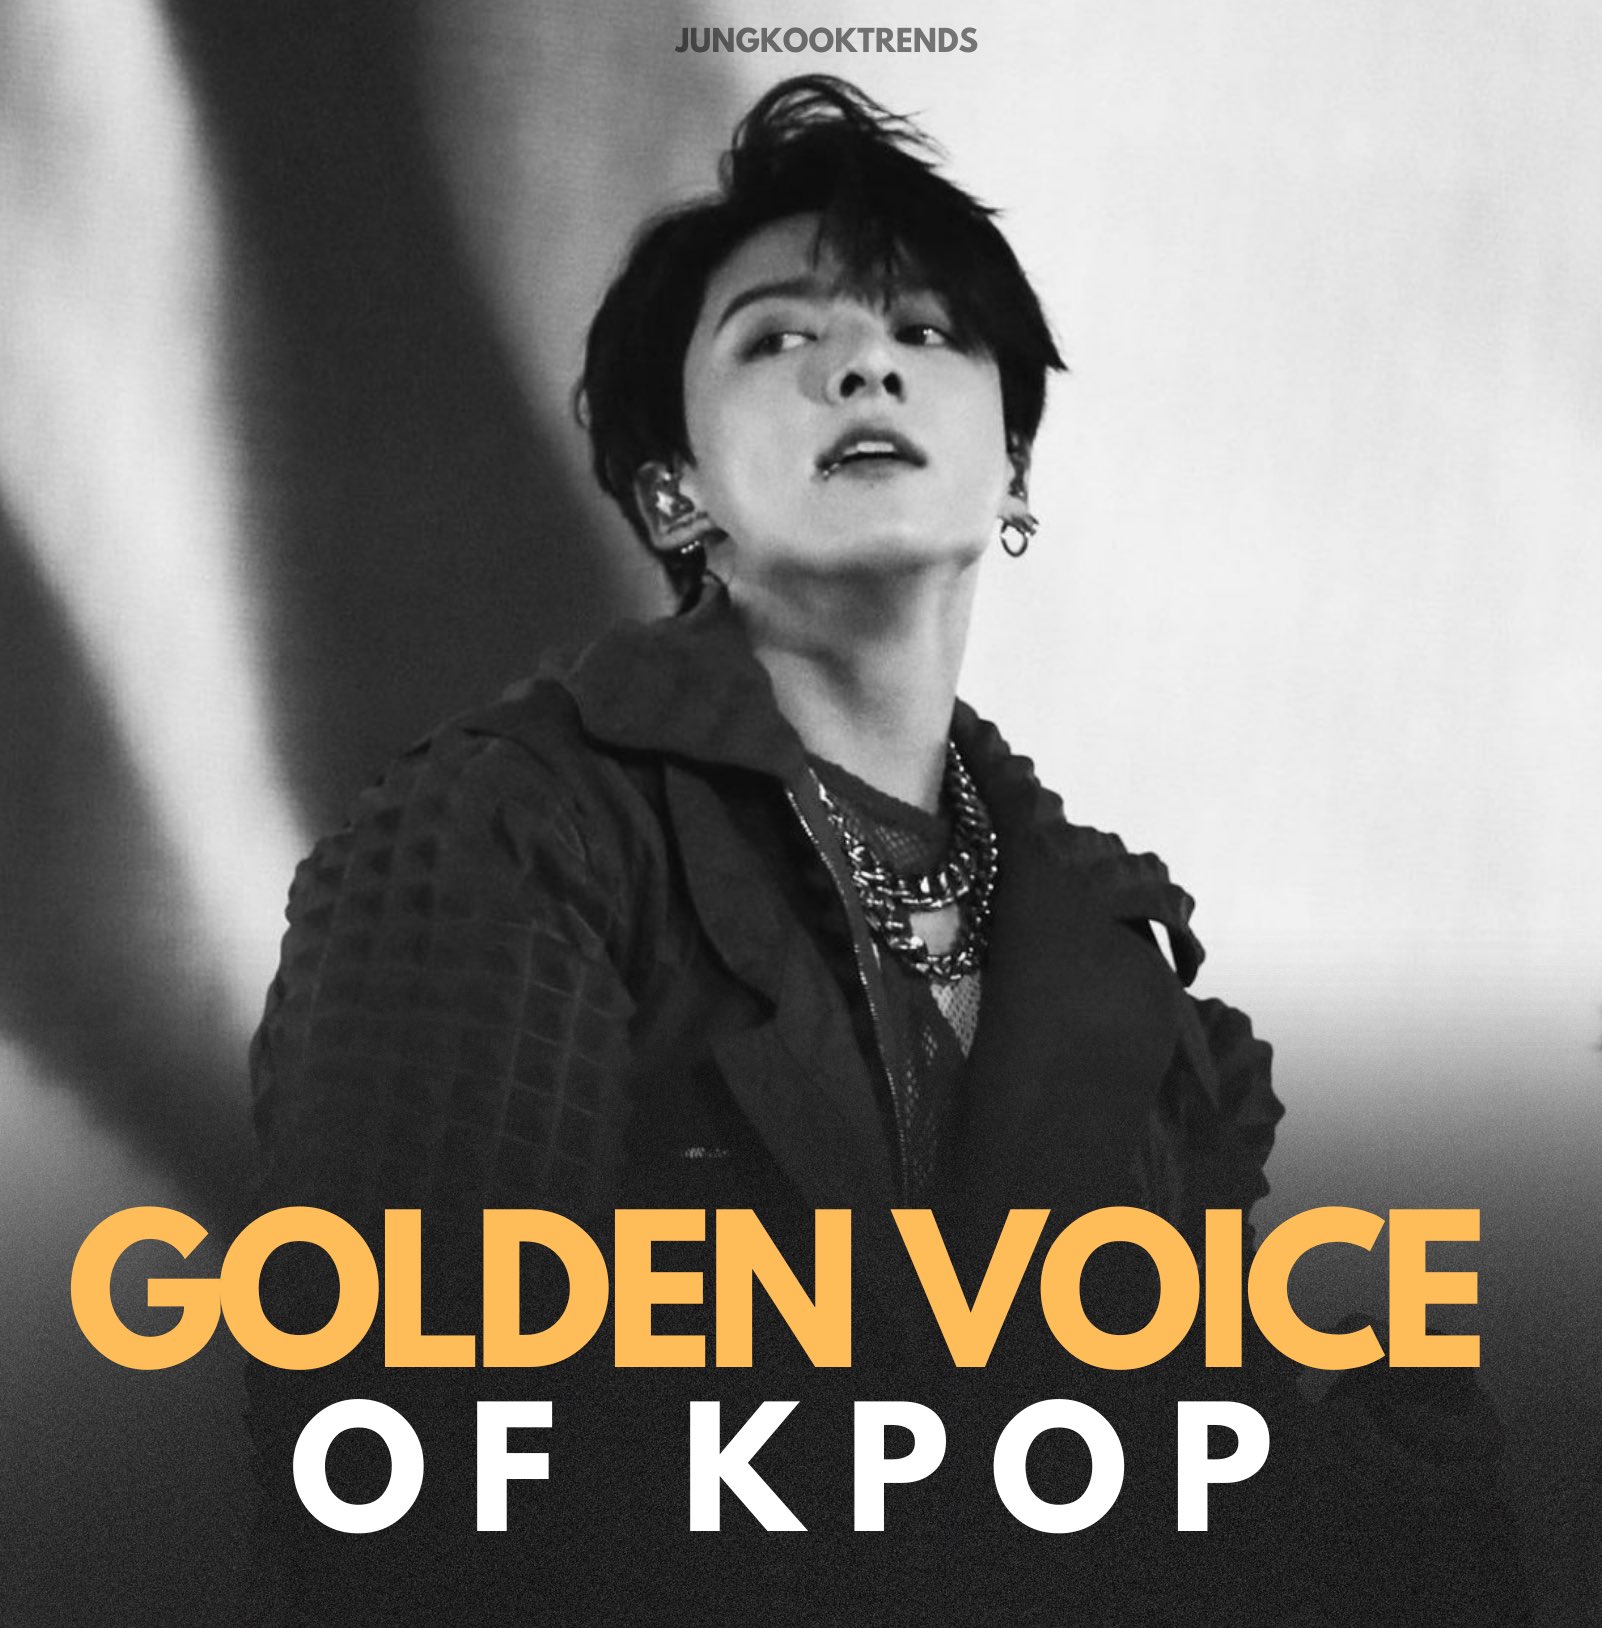 Who is Korea's golden voice?